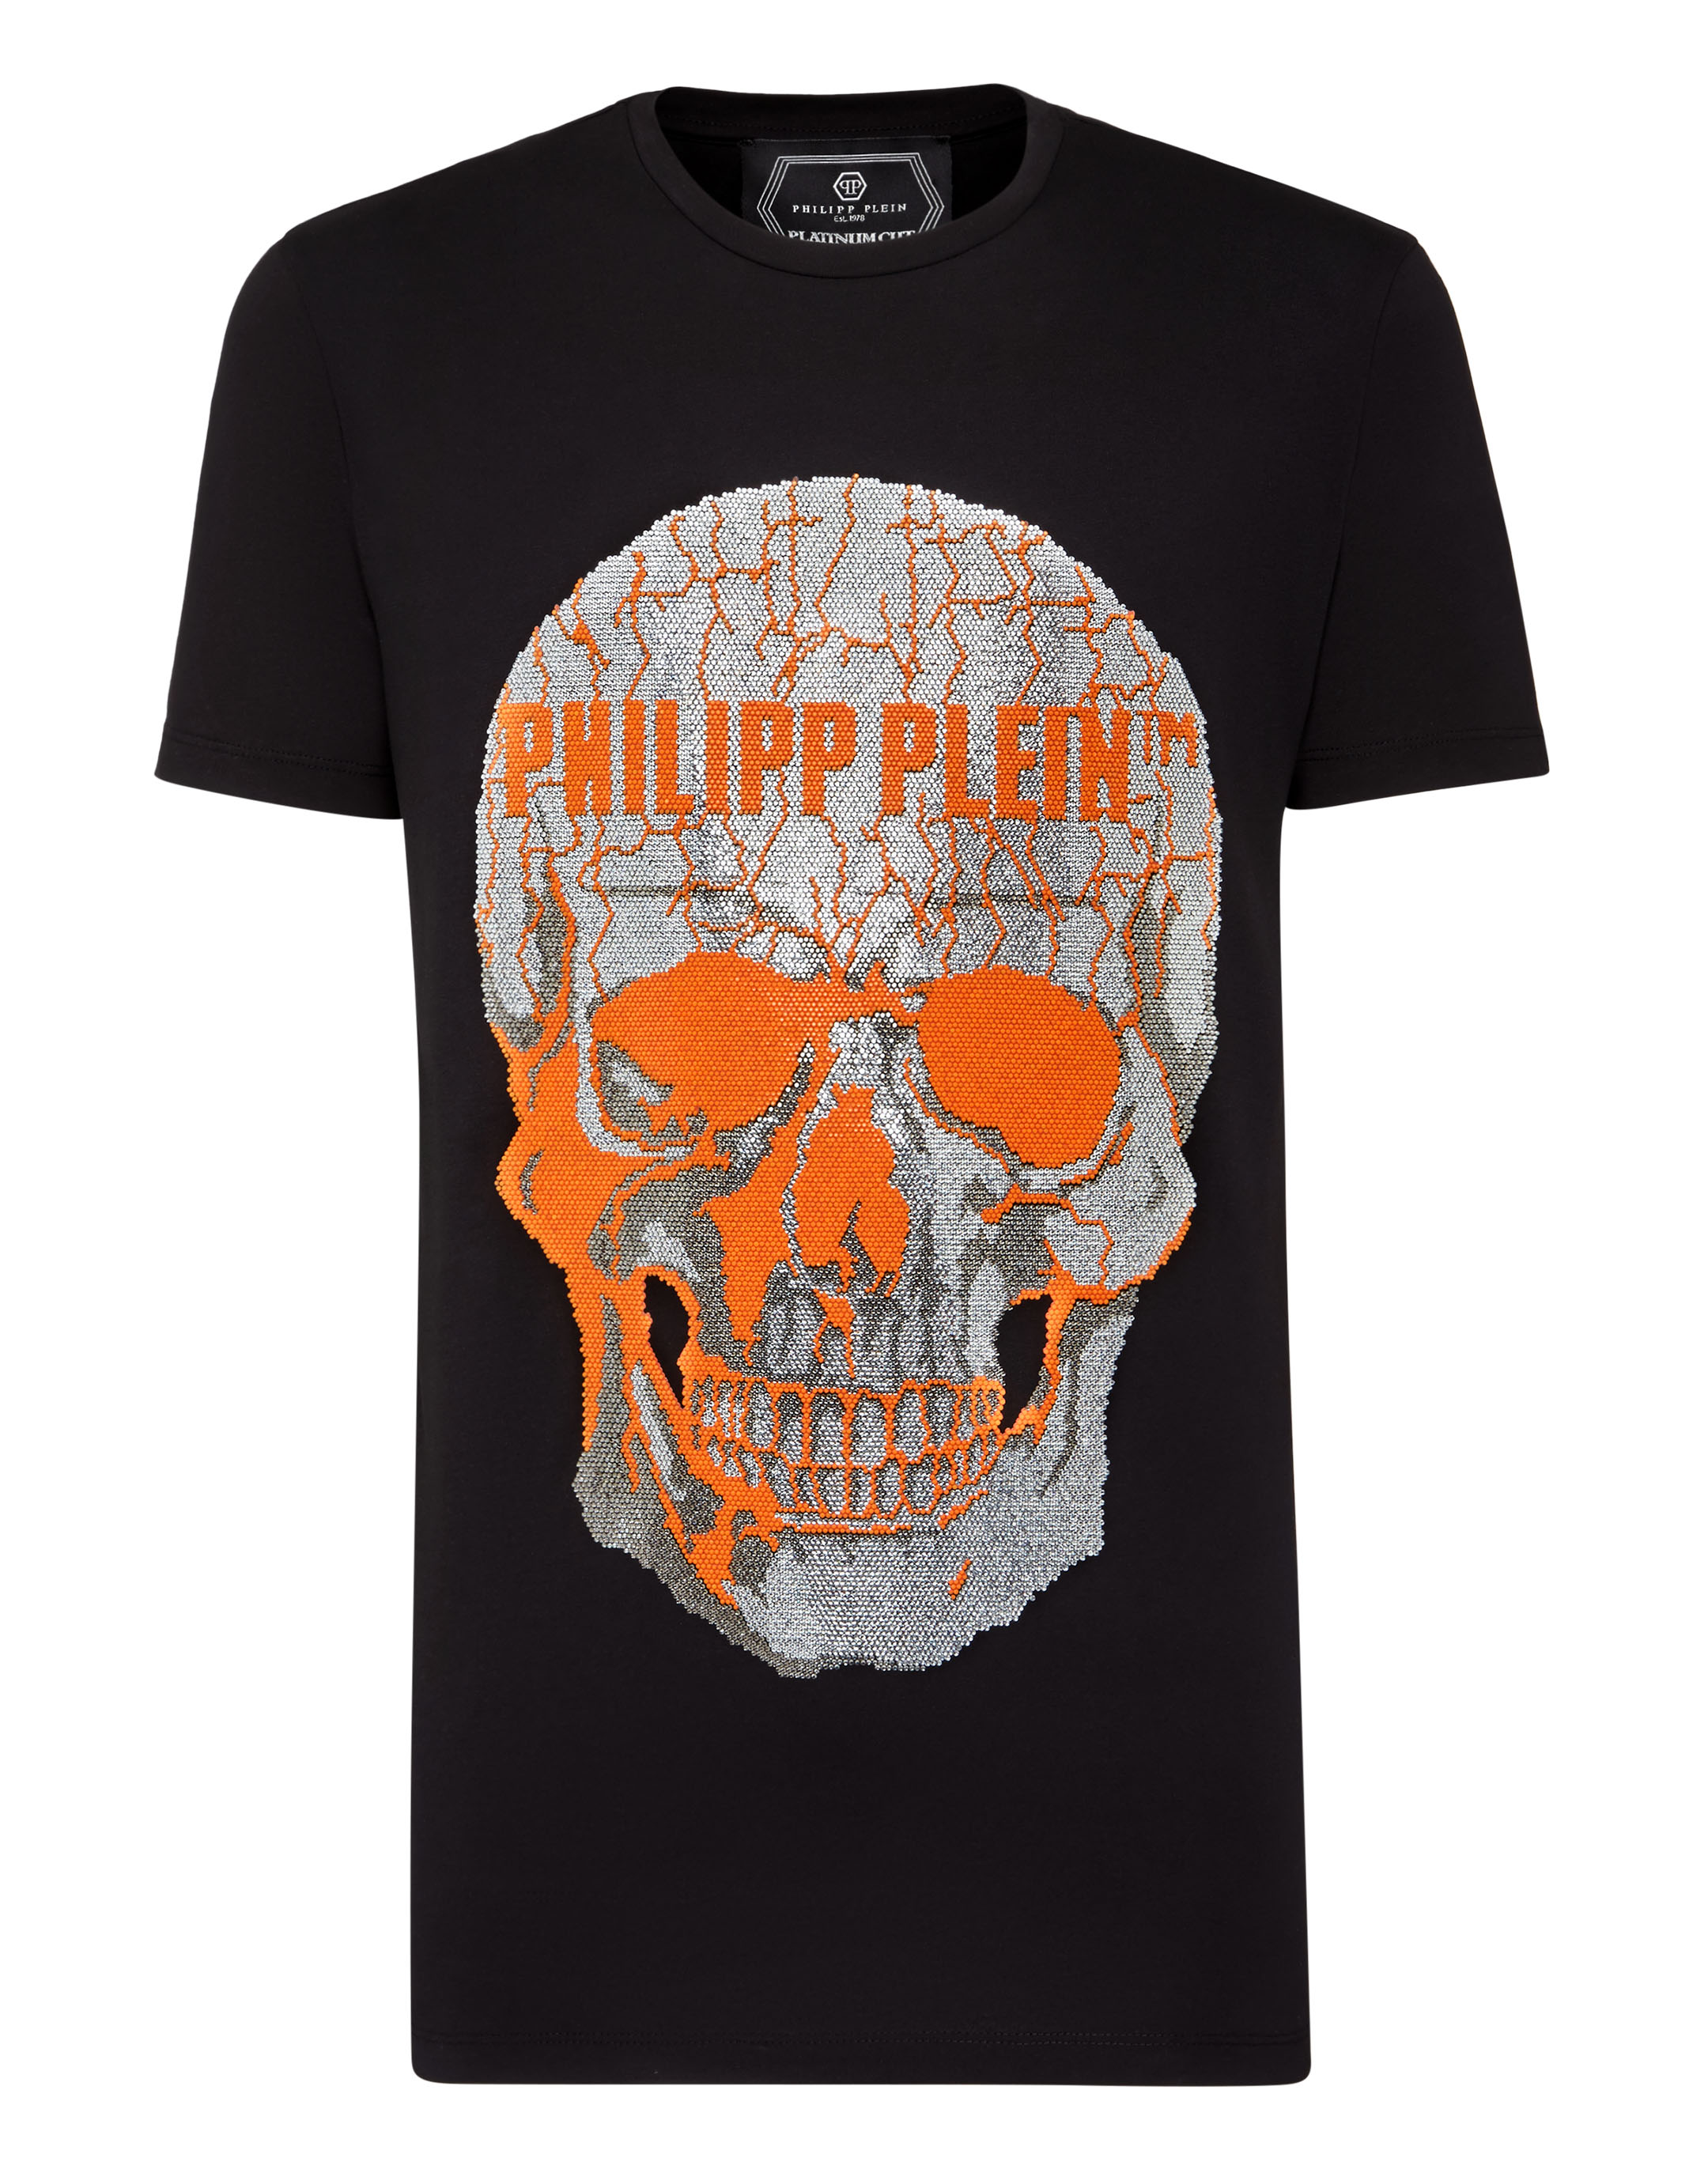 philipp plein orange t shirt